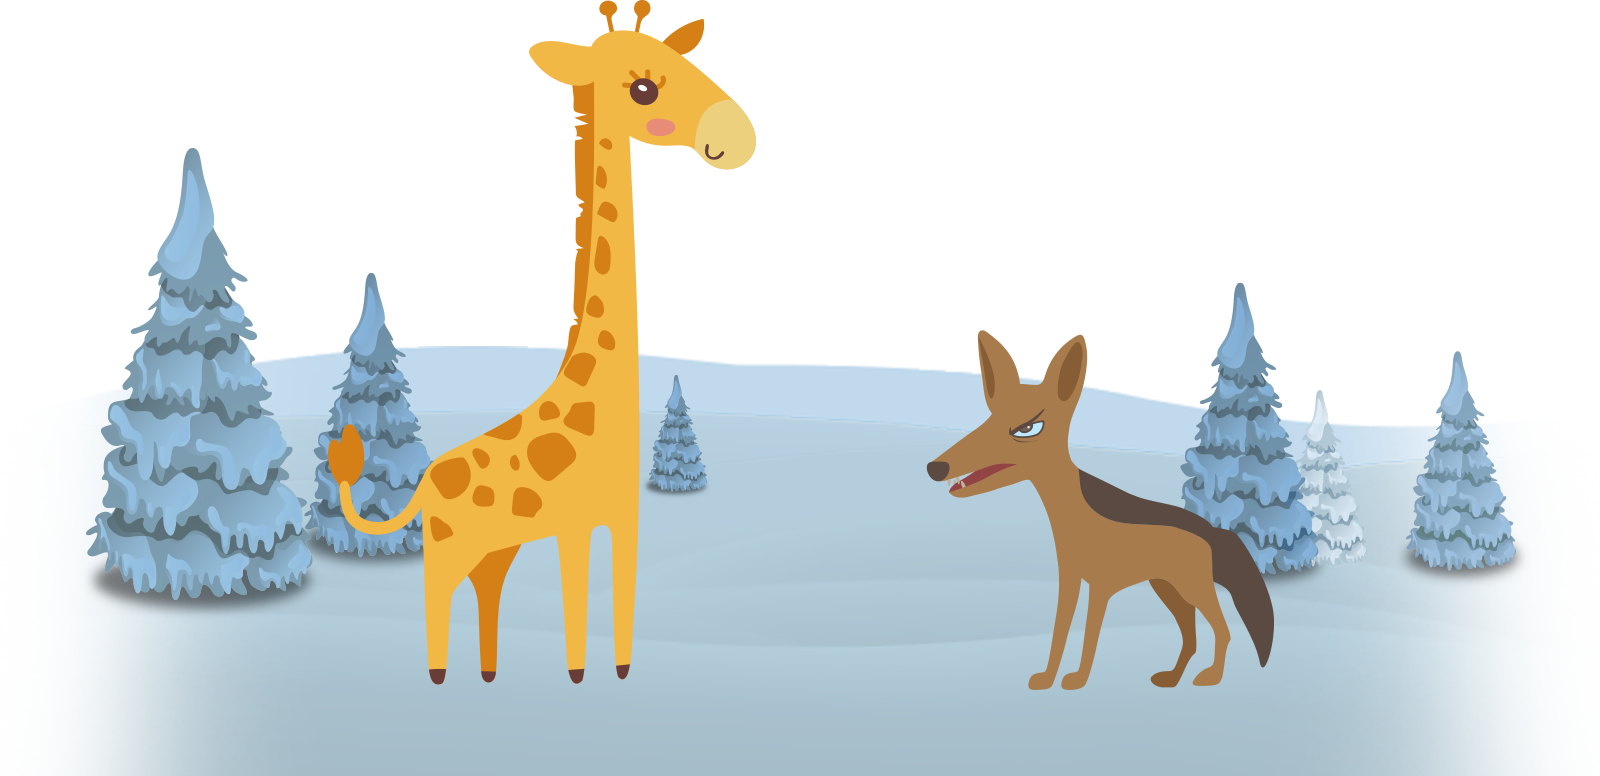 giraffe and jackal in a winter wonderland